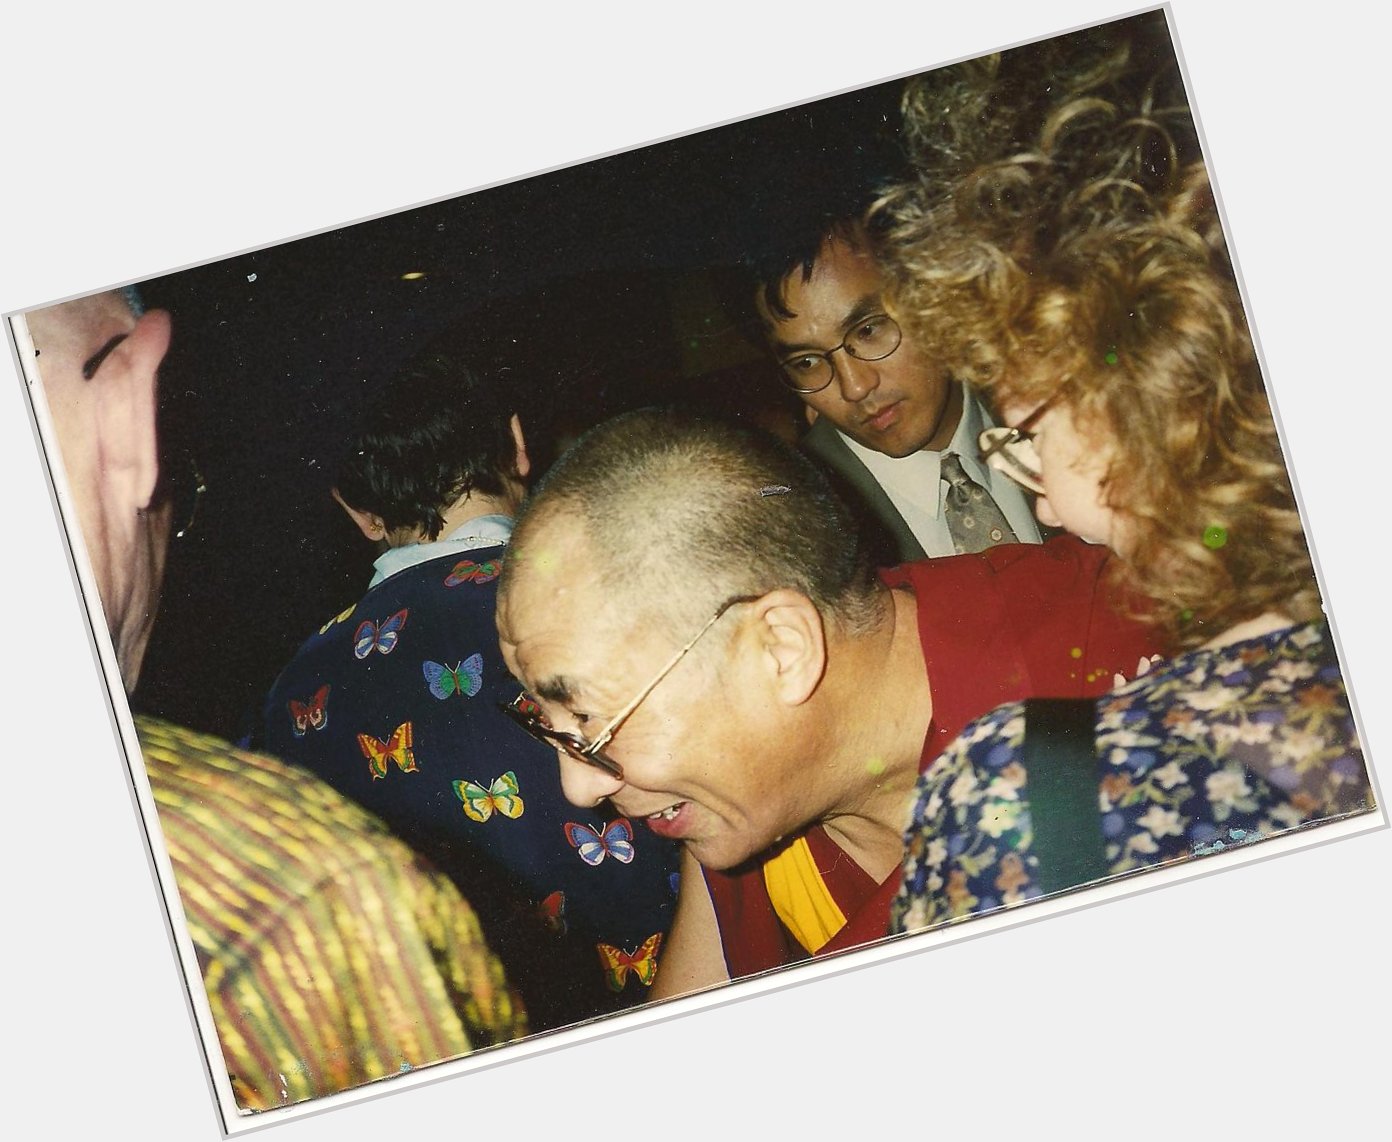 Happy 80th Birthday to His Holiness, the Dalai Lama! 